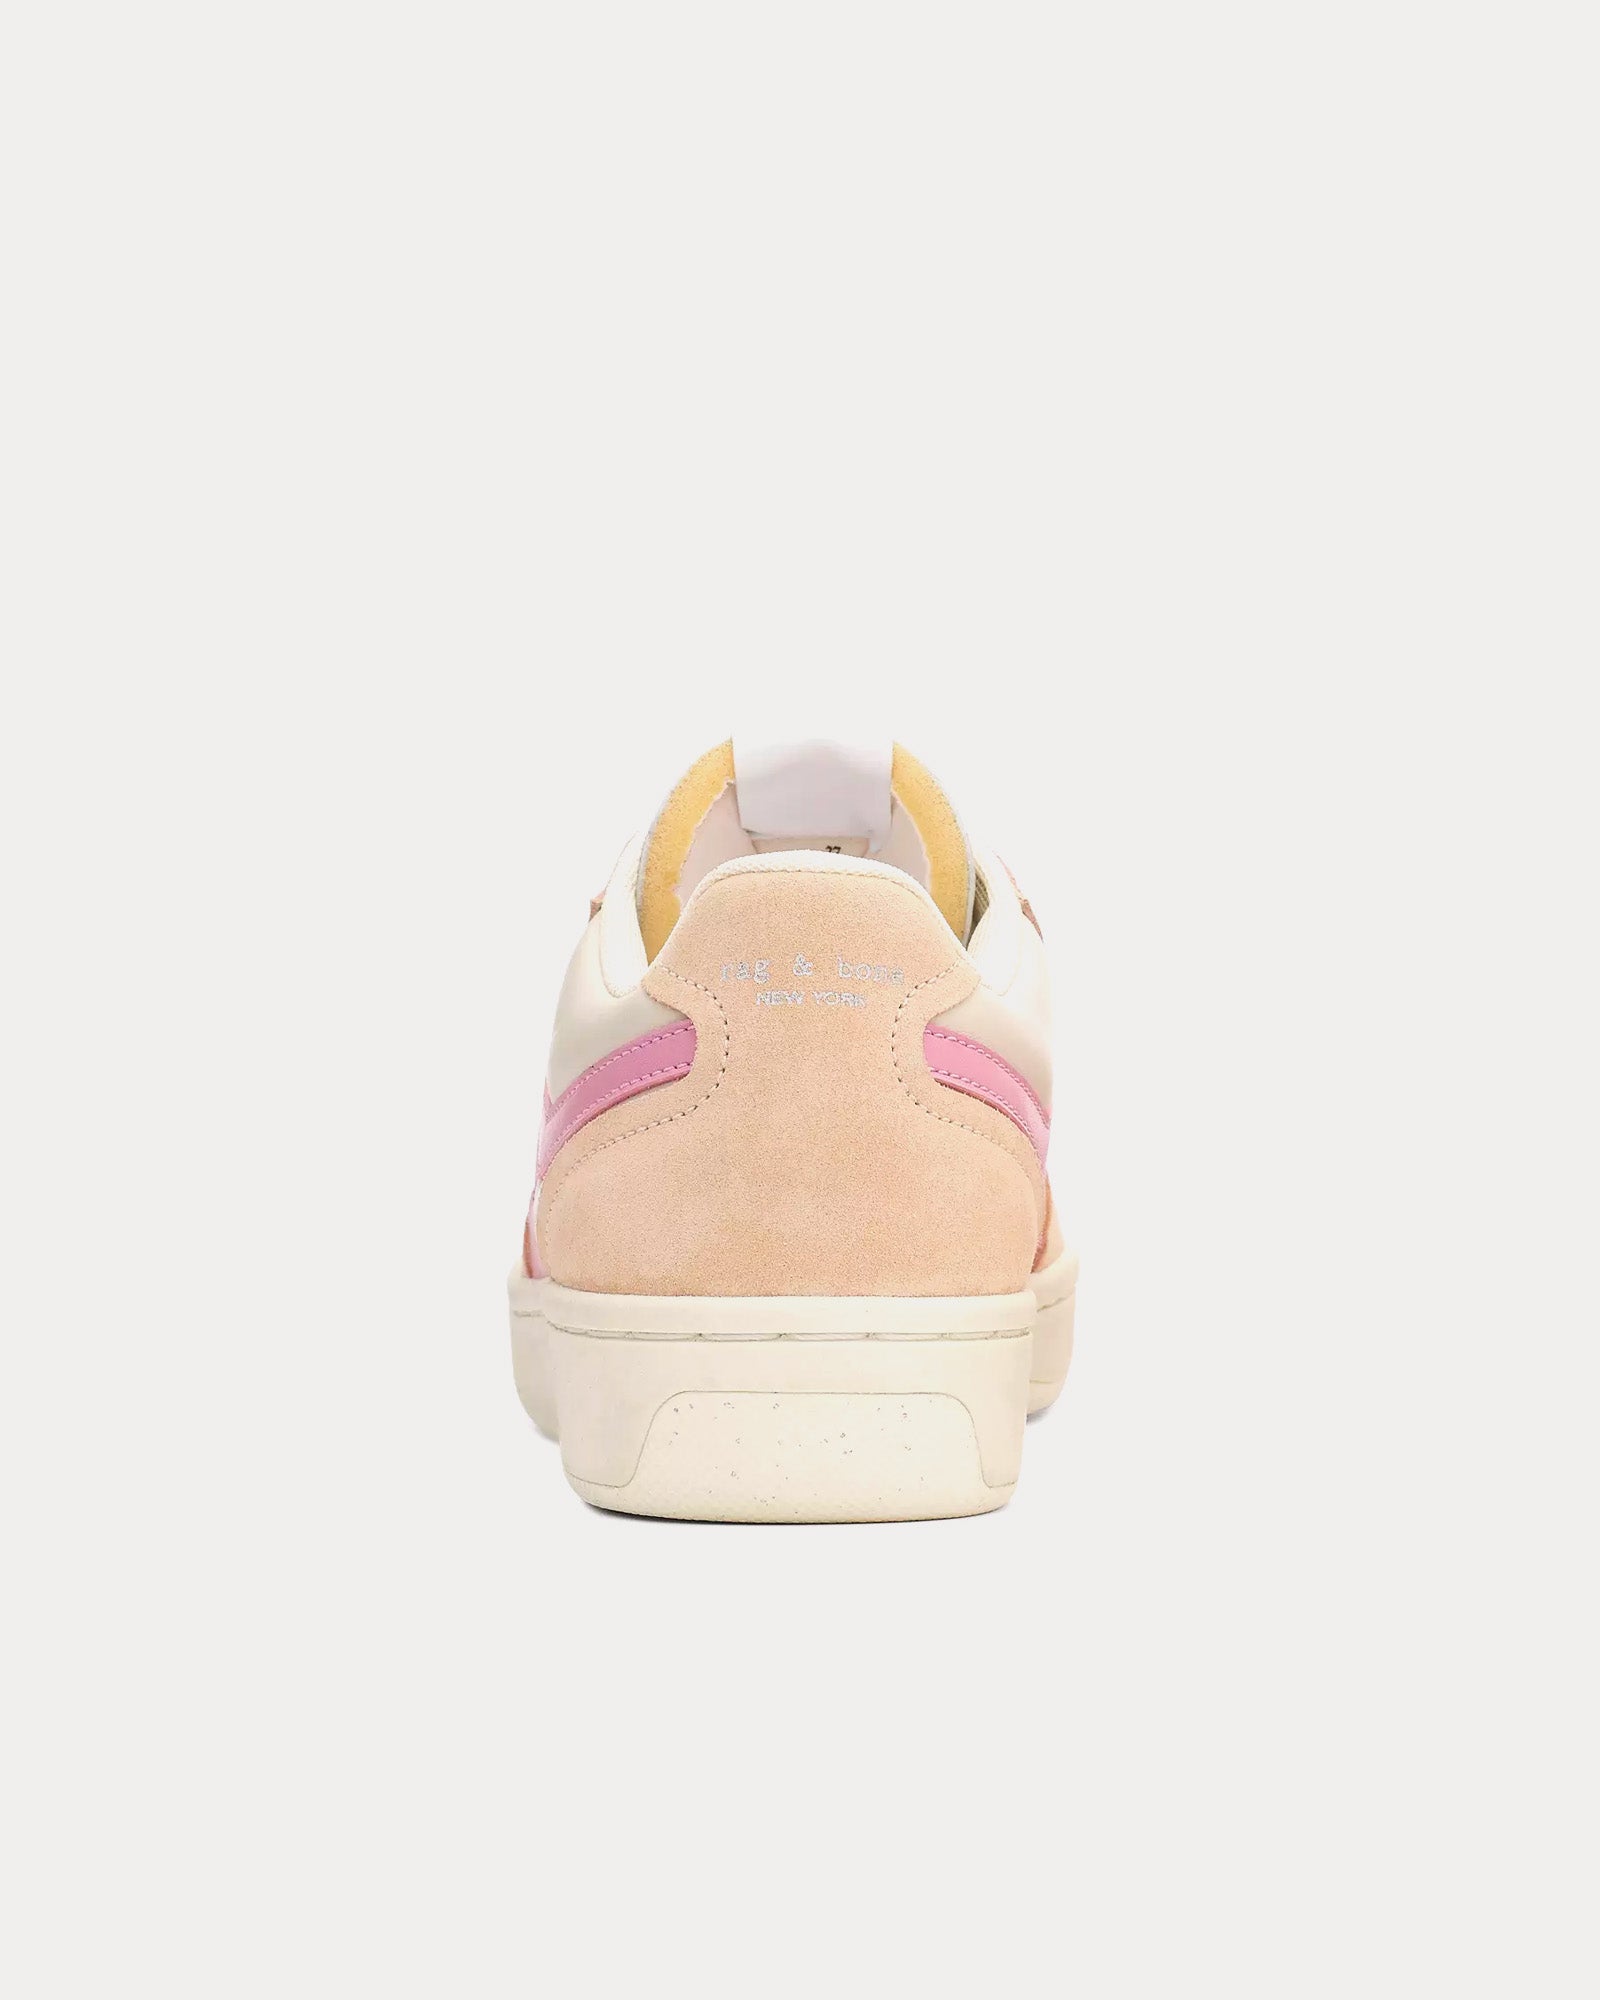 Rag & Bone - Retro Court Leather Turtle Dove / Sakura Pink Low Top Sneakers